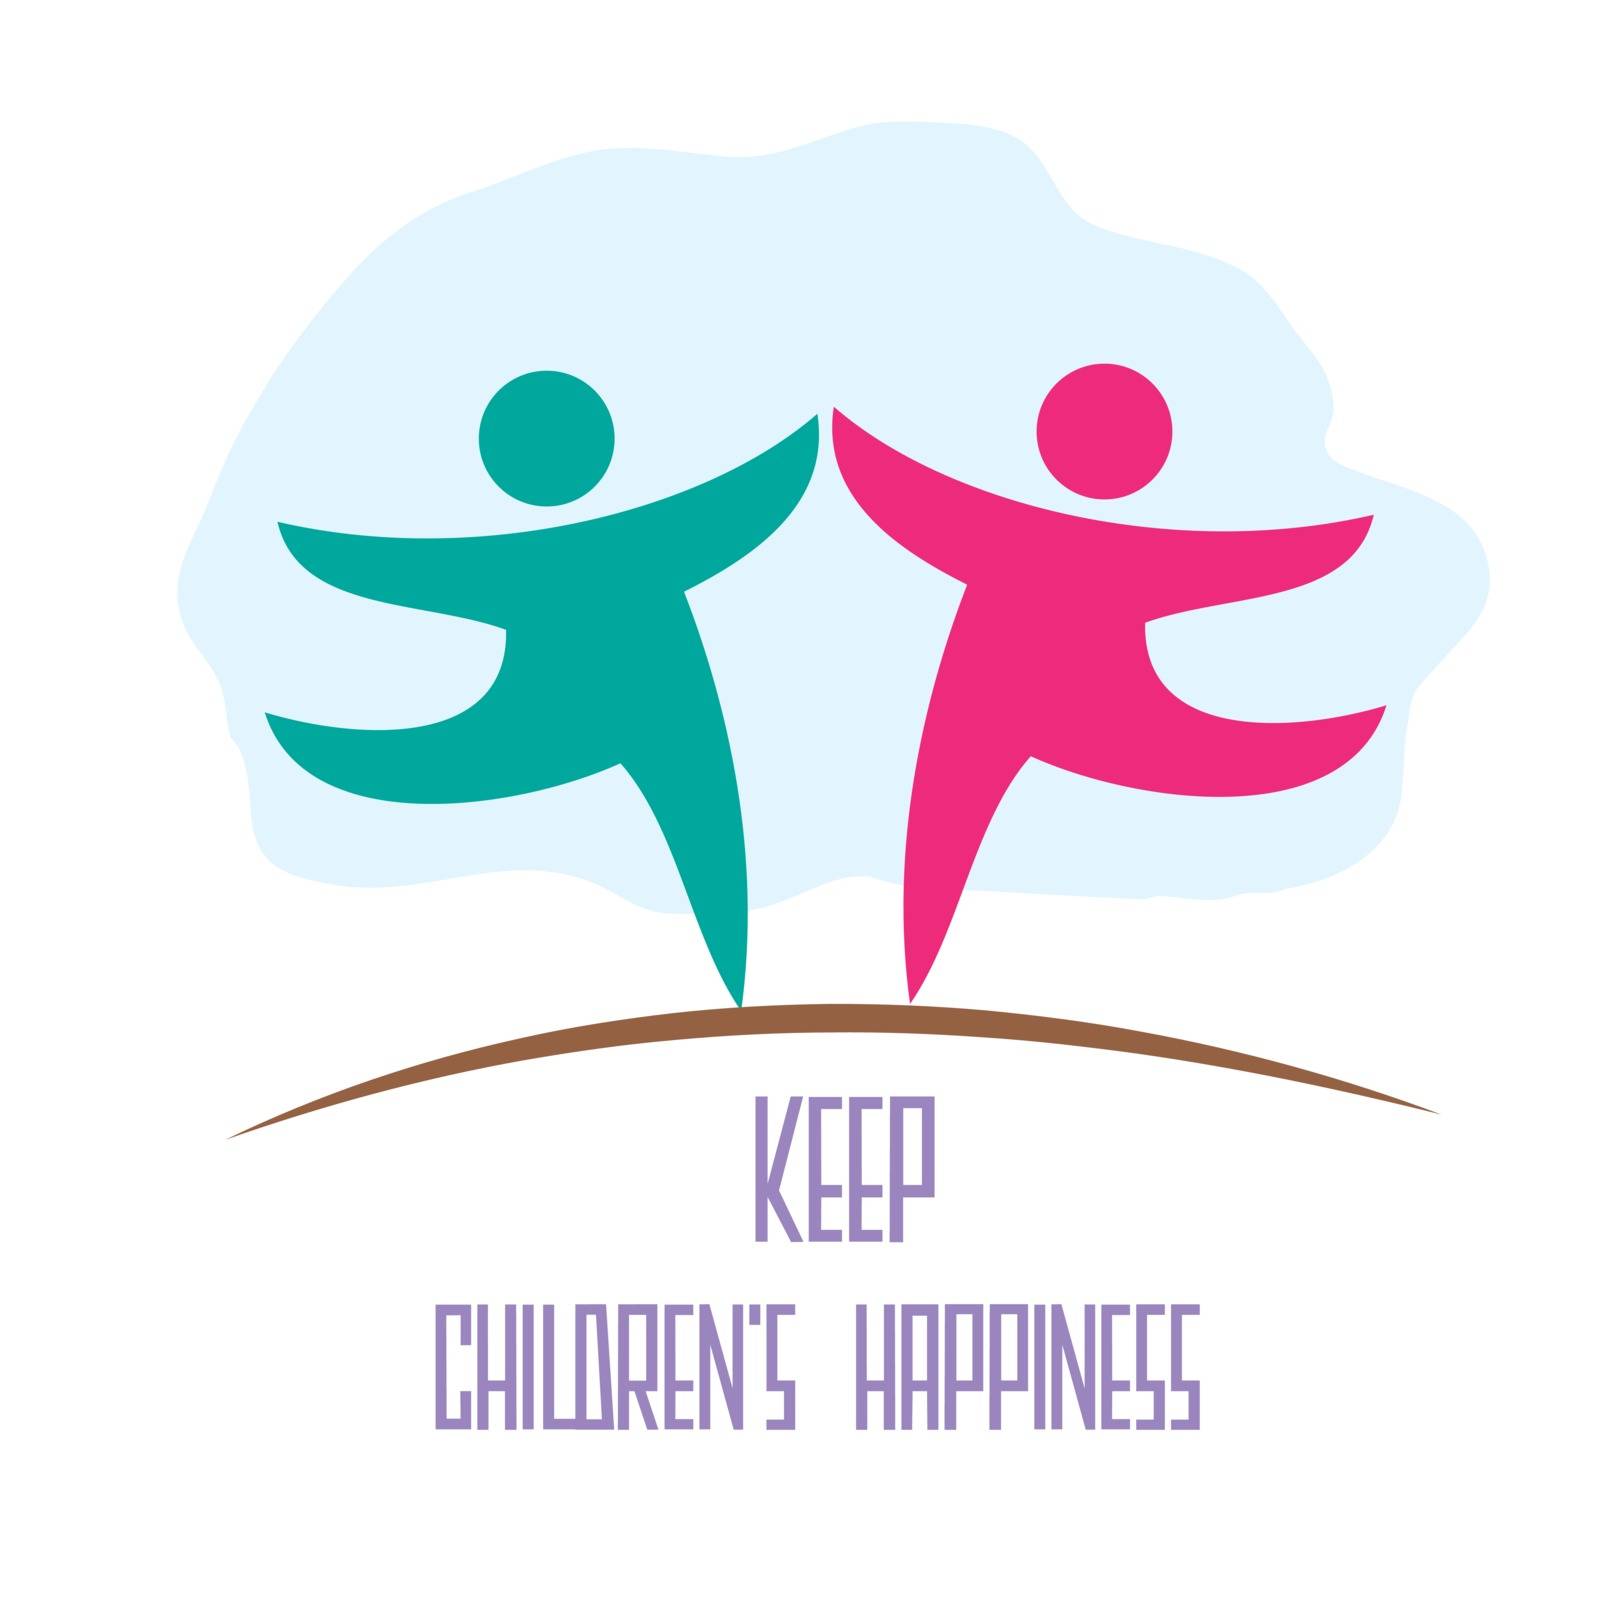 keep children's happiness, vector illustration